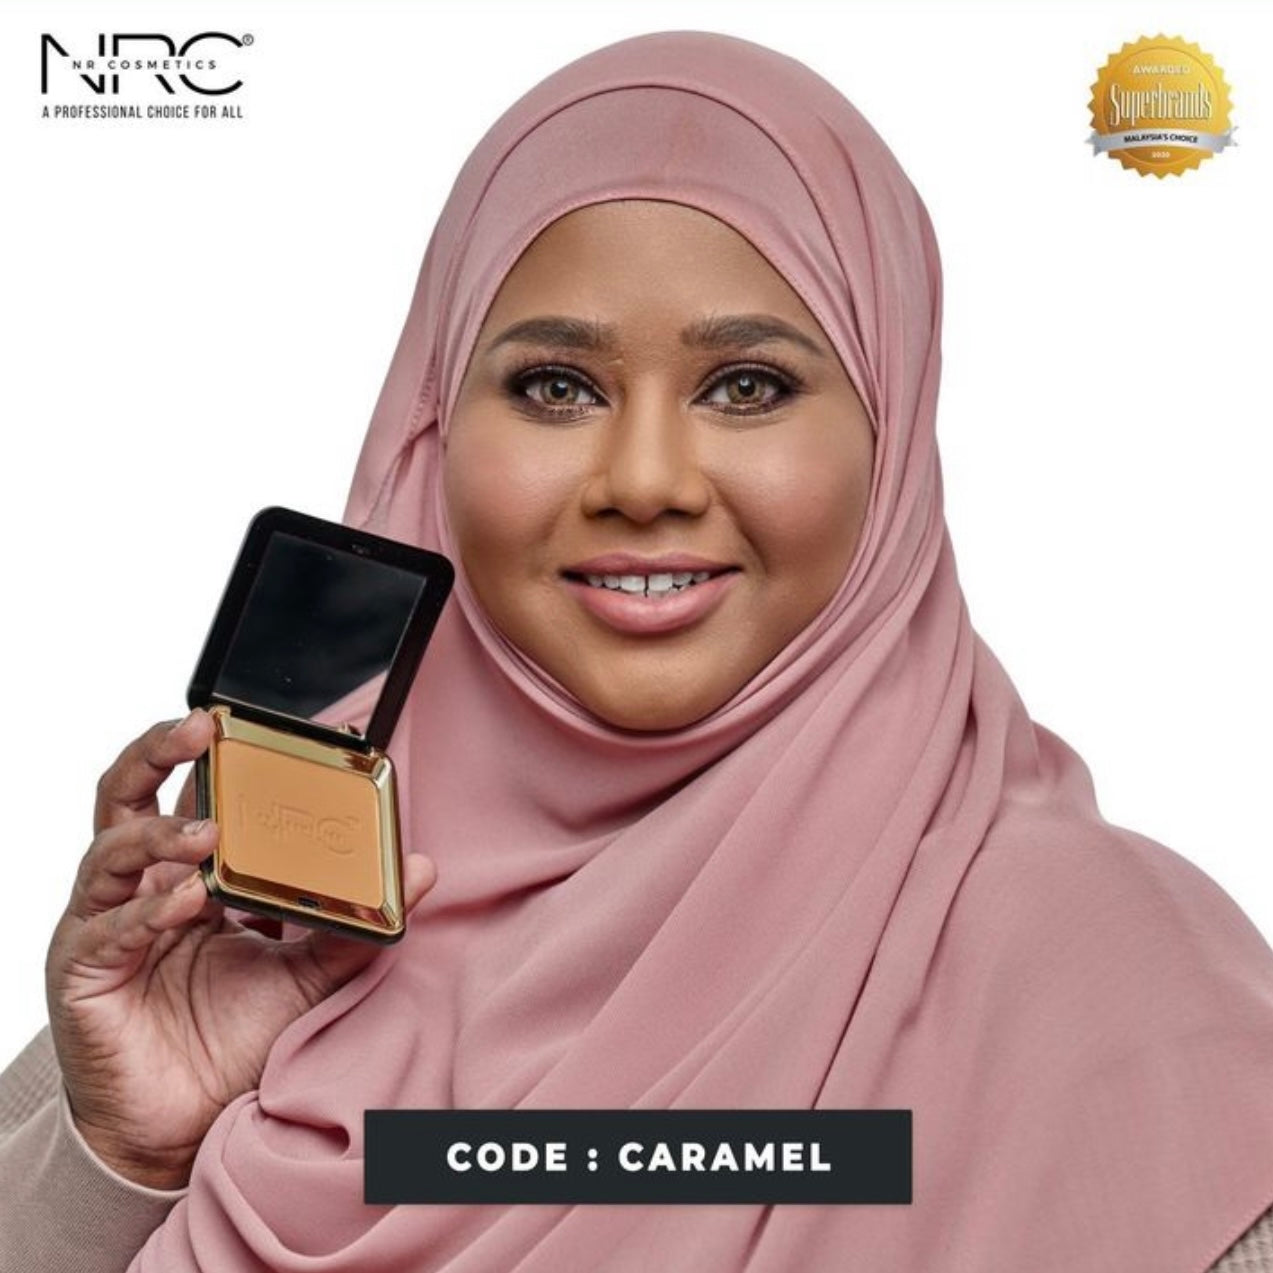 NRC Compact Powder